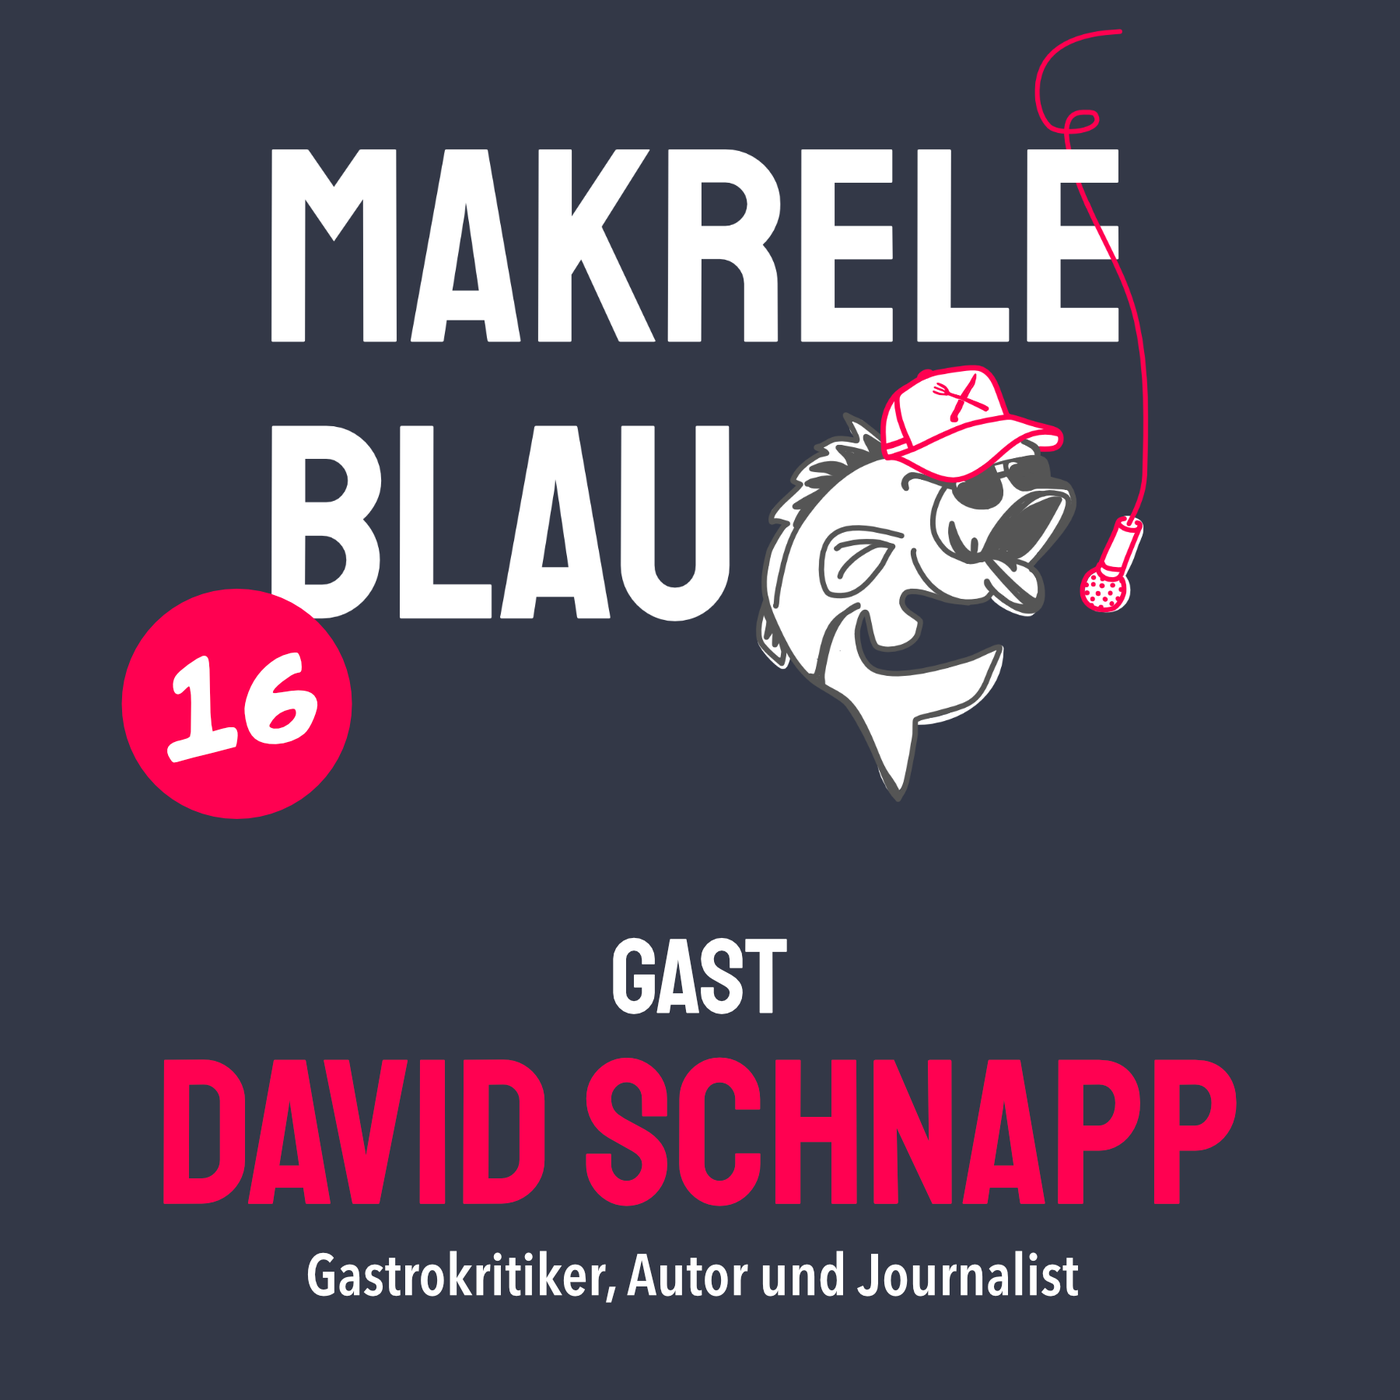 Makrele Blau #16 – Mission Gourmet, mit em David Schnapp